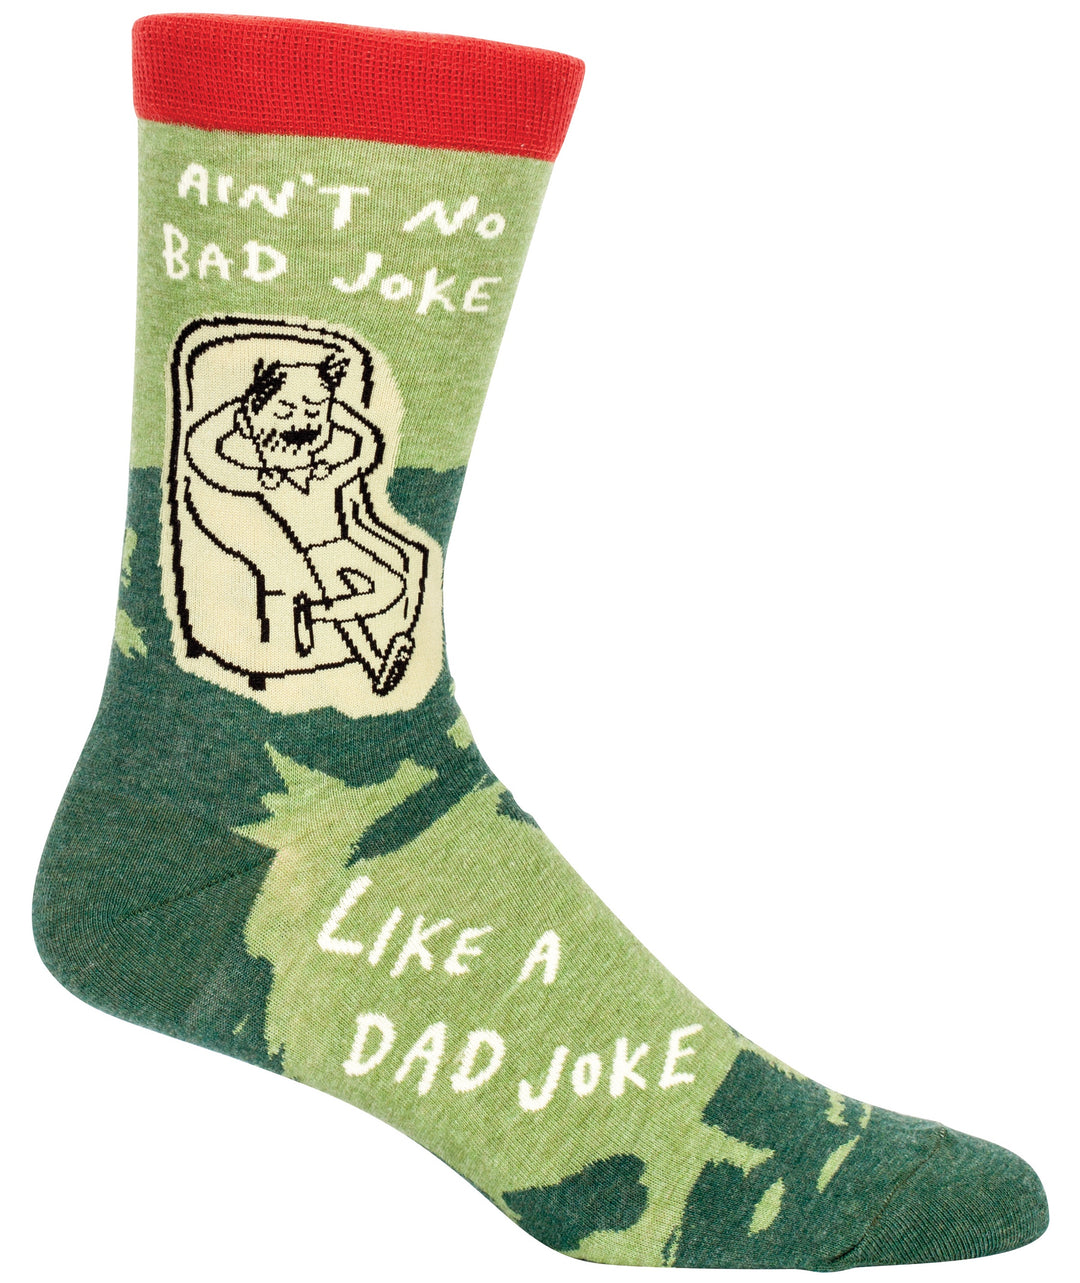 BlueQ - Men's Socks - Dad Joke